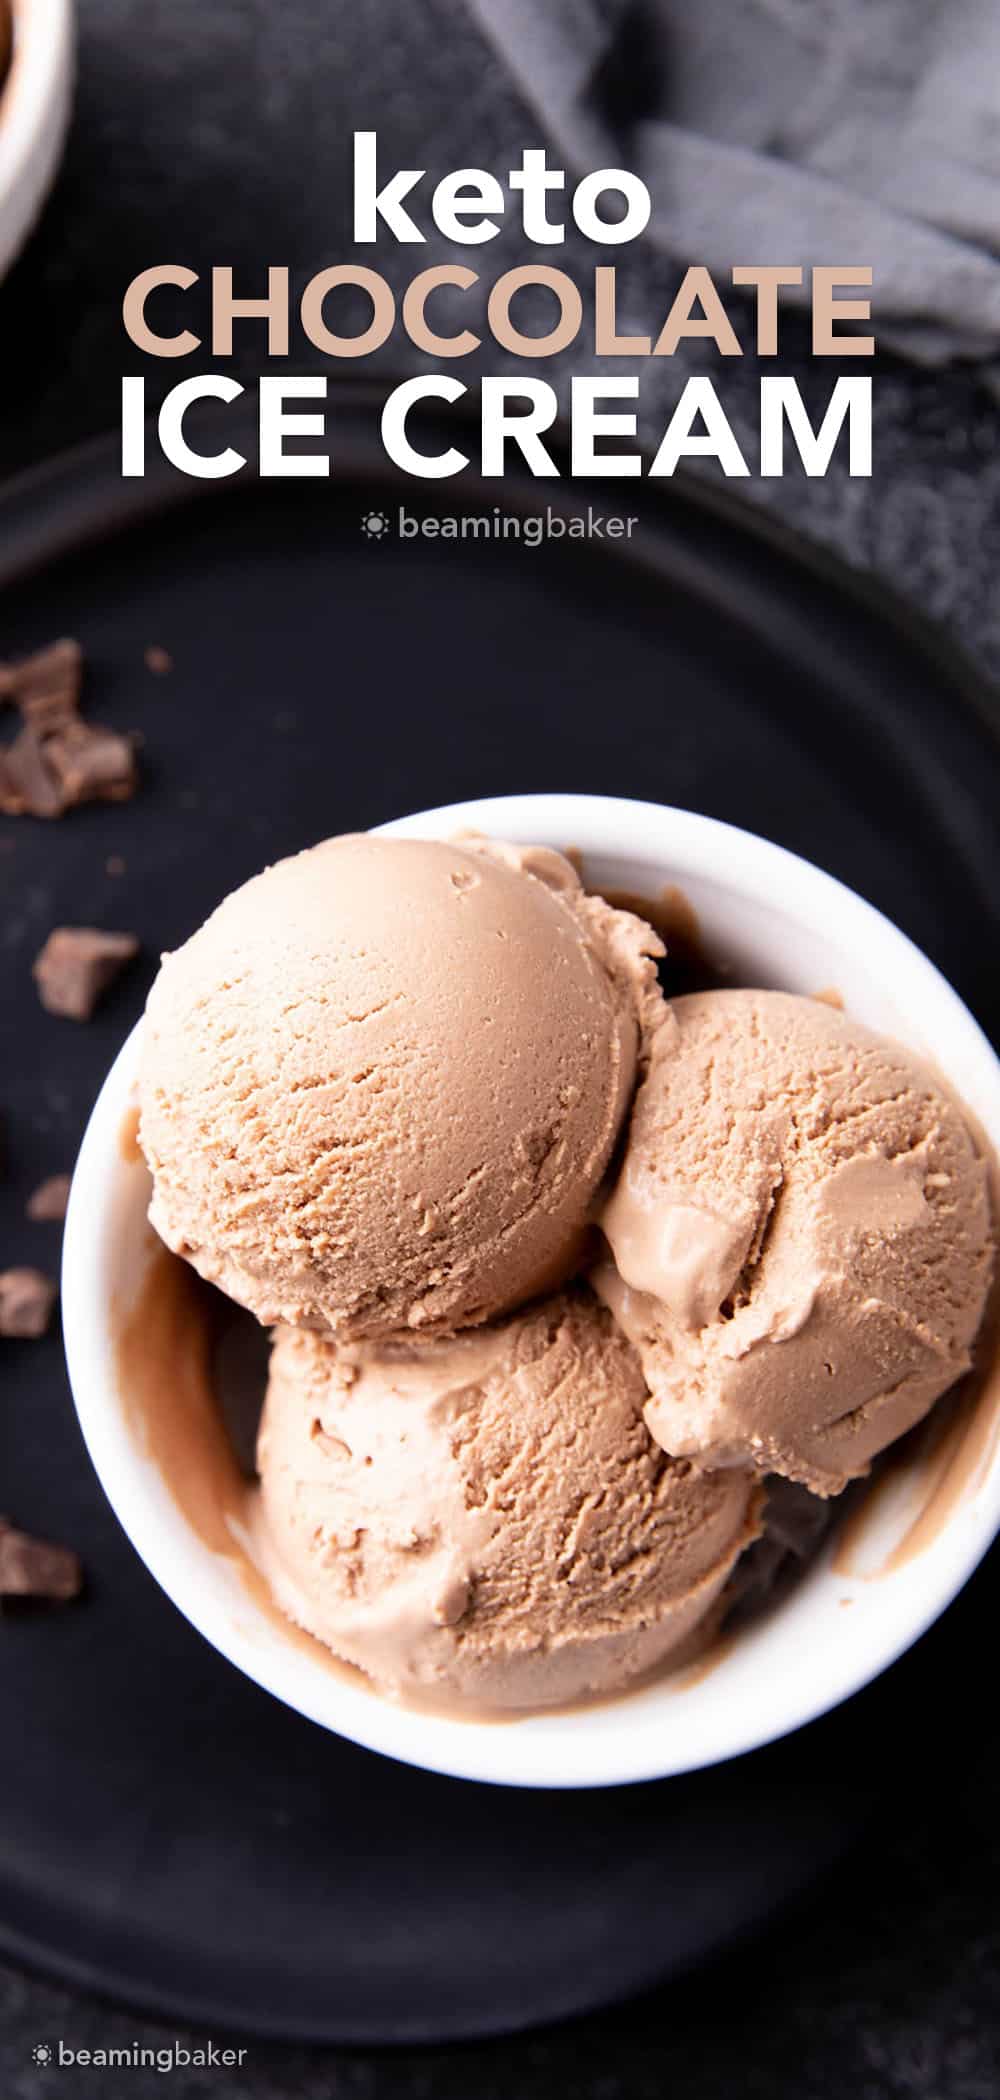 Chocolate Keto Ice Cream Recipe: this decadent chocolate keto ice cream recipe yields rich ‘n creamy homemade keto ice cream. Just 1 net carb for delicious keto ice cream! #Keto #KetoIceCream #LowCarb #Chocolate | Recipe at BeamingBaker.com